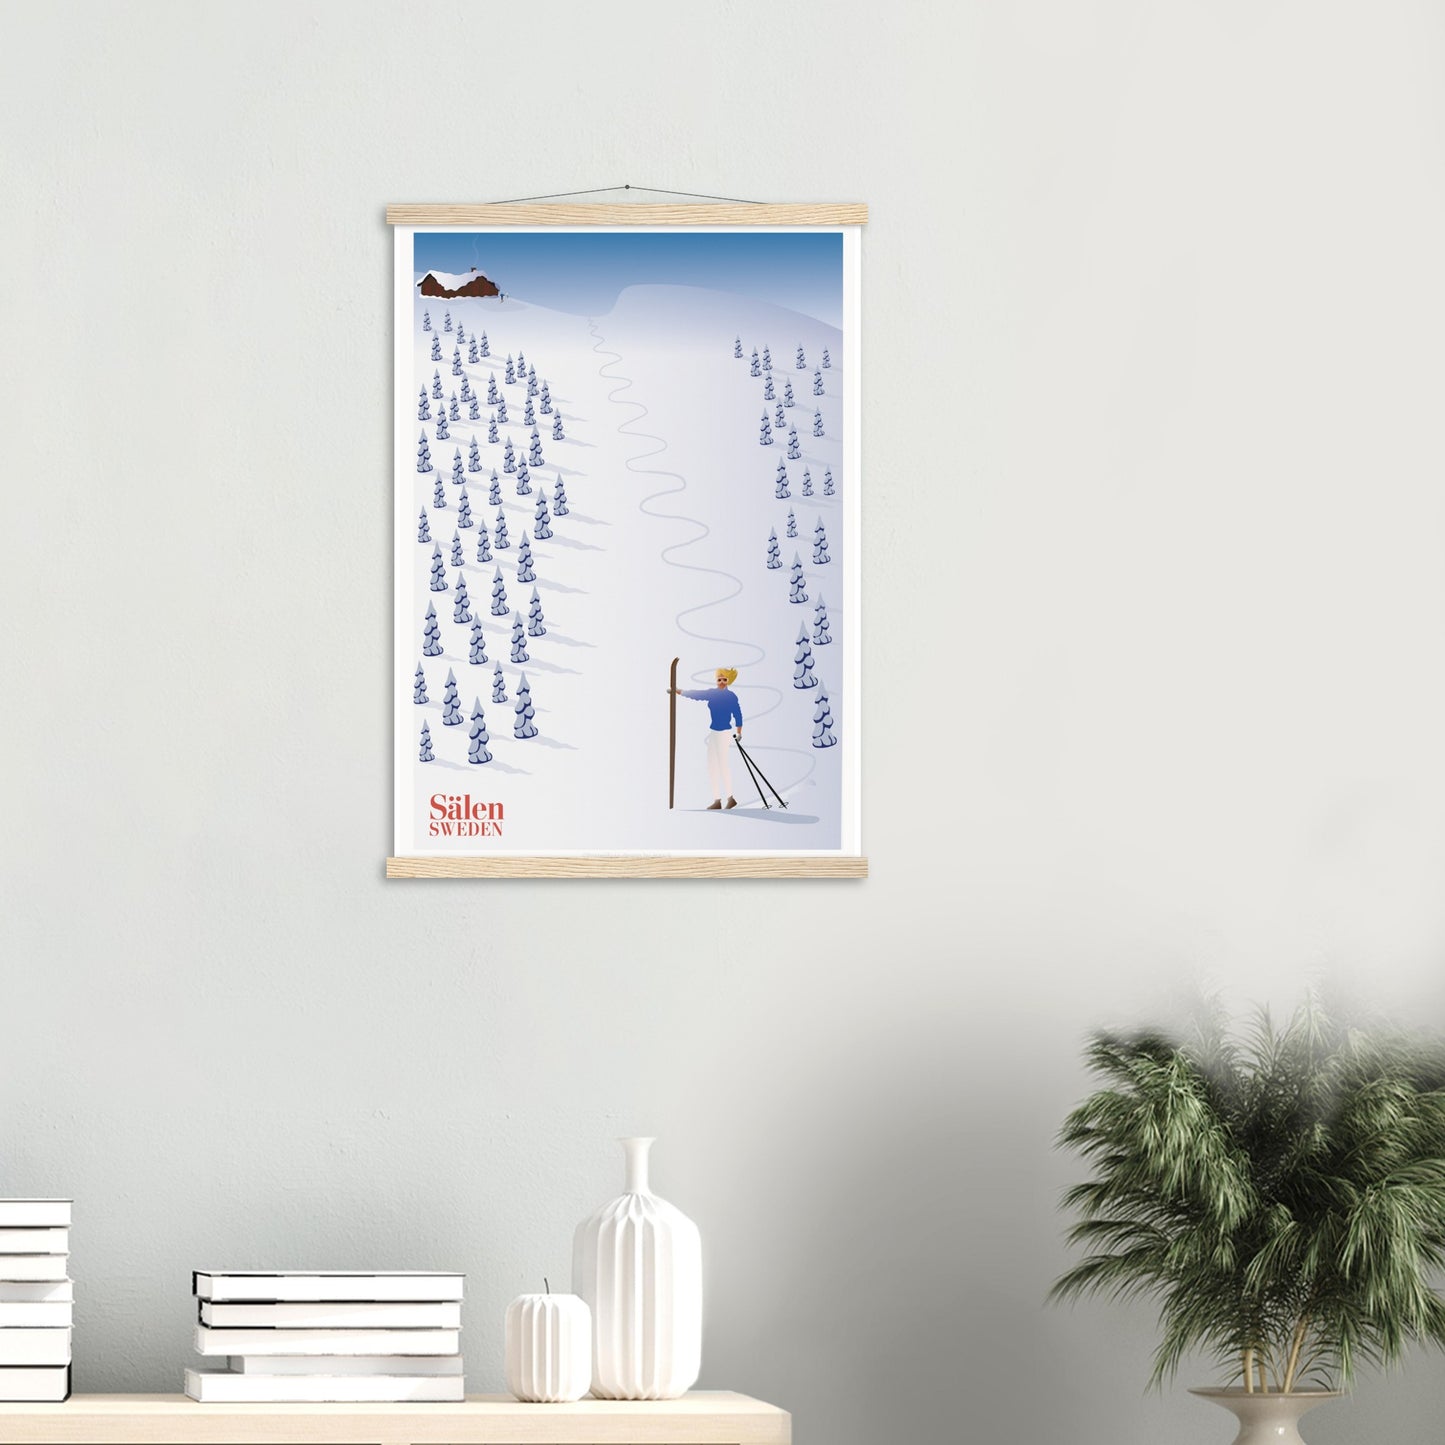 Sälen, Sweden, by Posterify Design, Poster Print on Premium Matte Paper